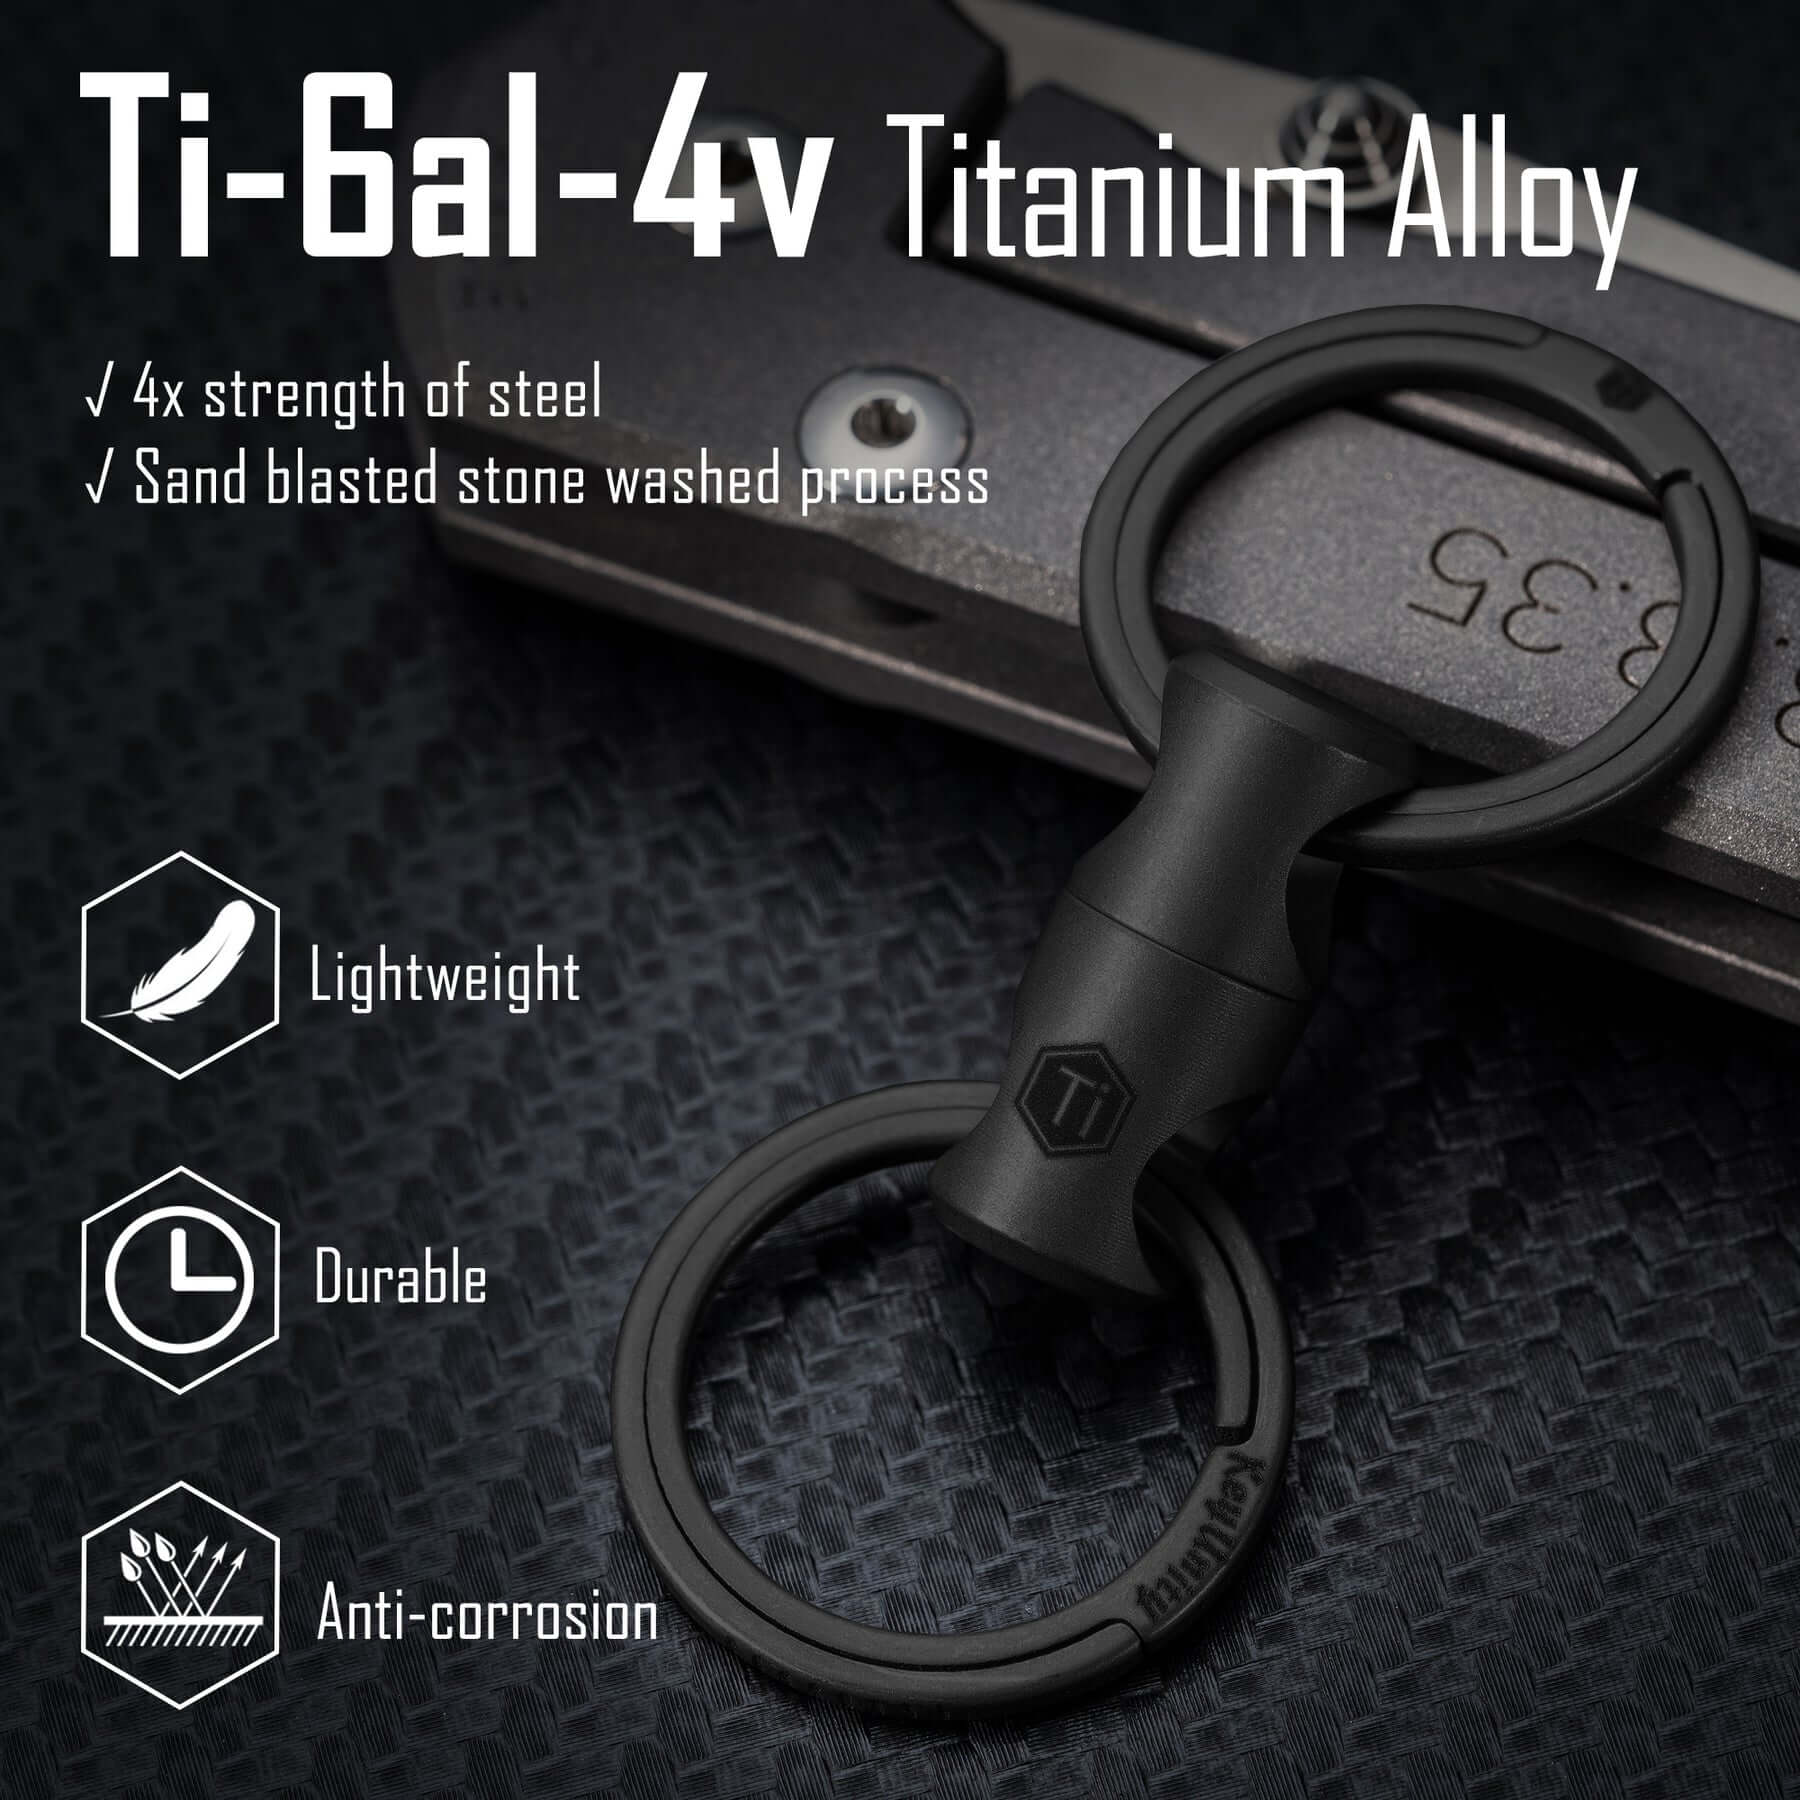 KeyUnity KA24 Titanium Alloy Keychain Key Ring Connector